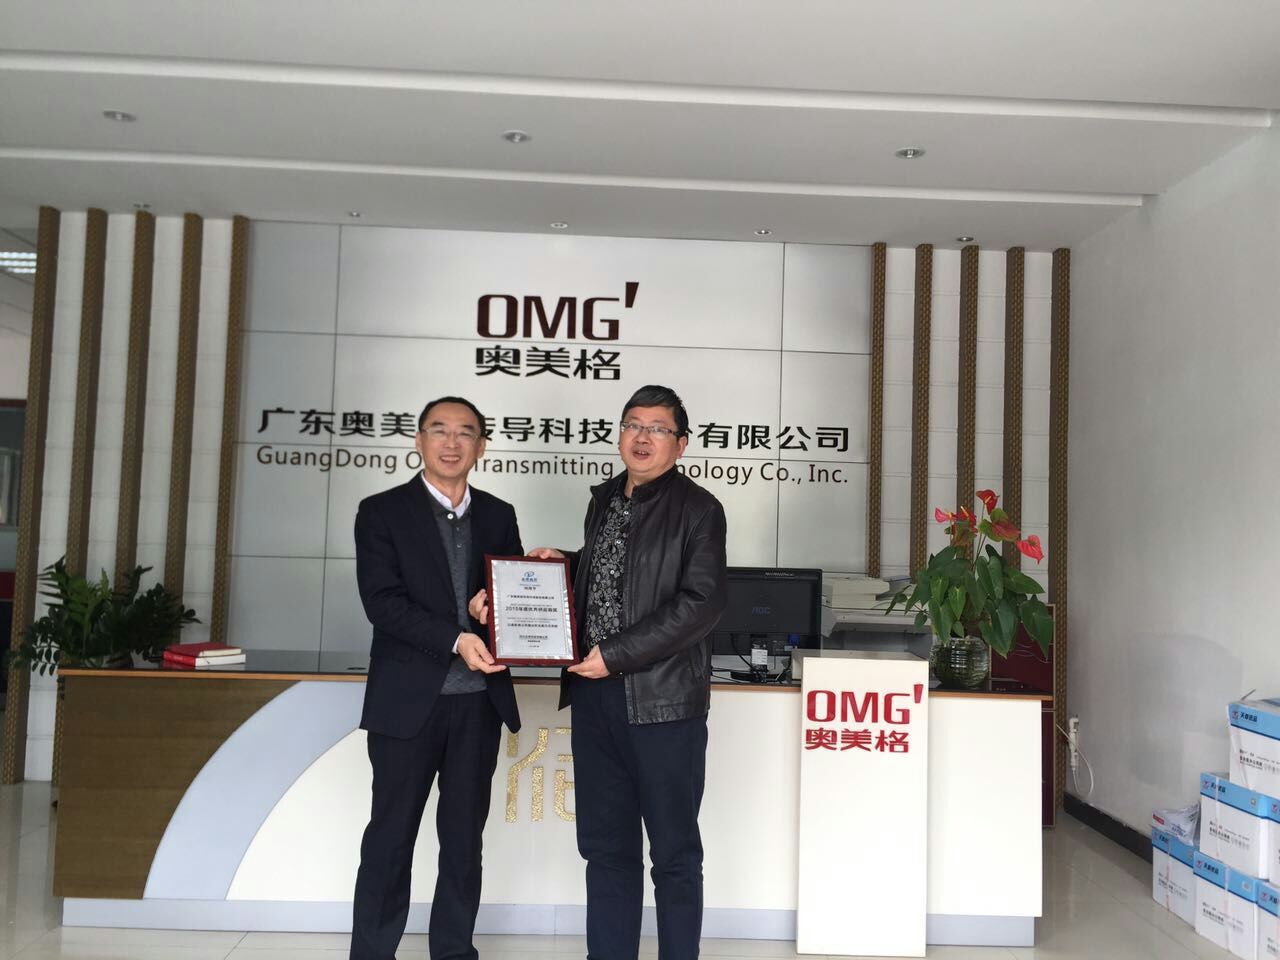 OMG는 쓰촨 Yonggui 우수 공급 업체 상을 수상했습니다.